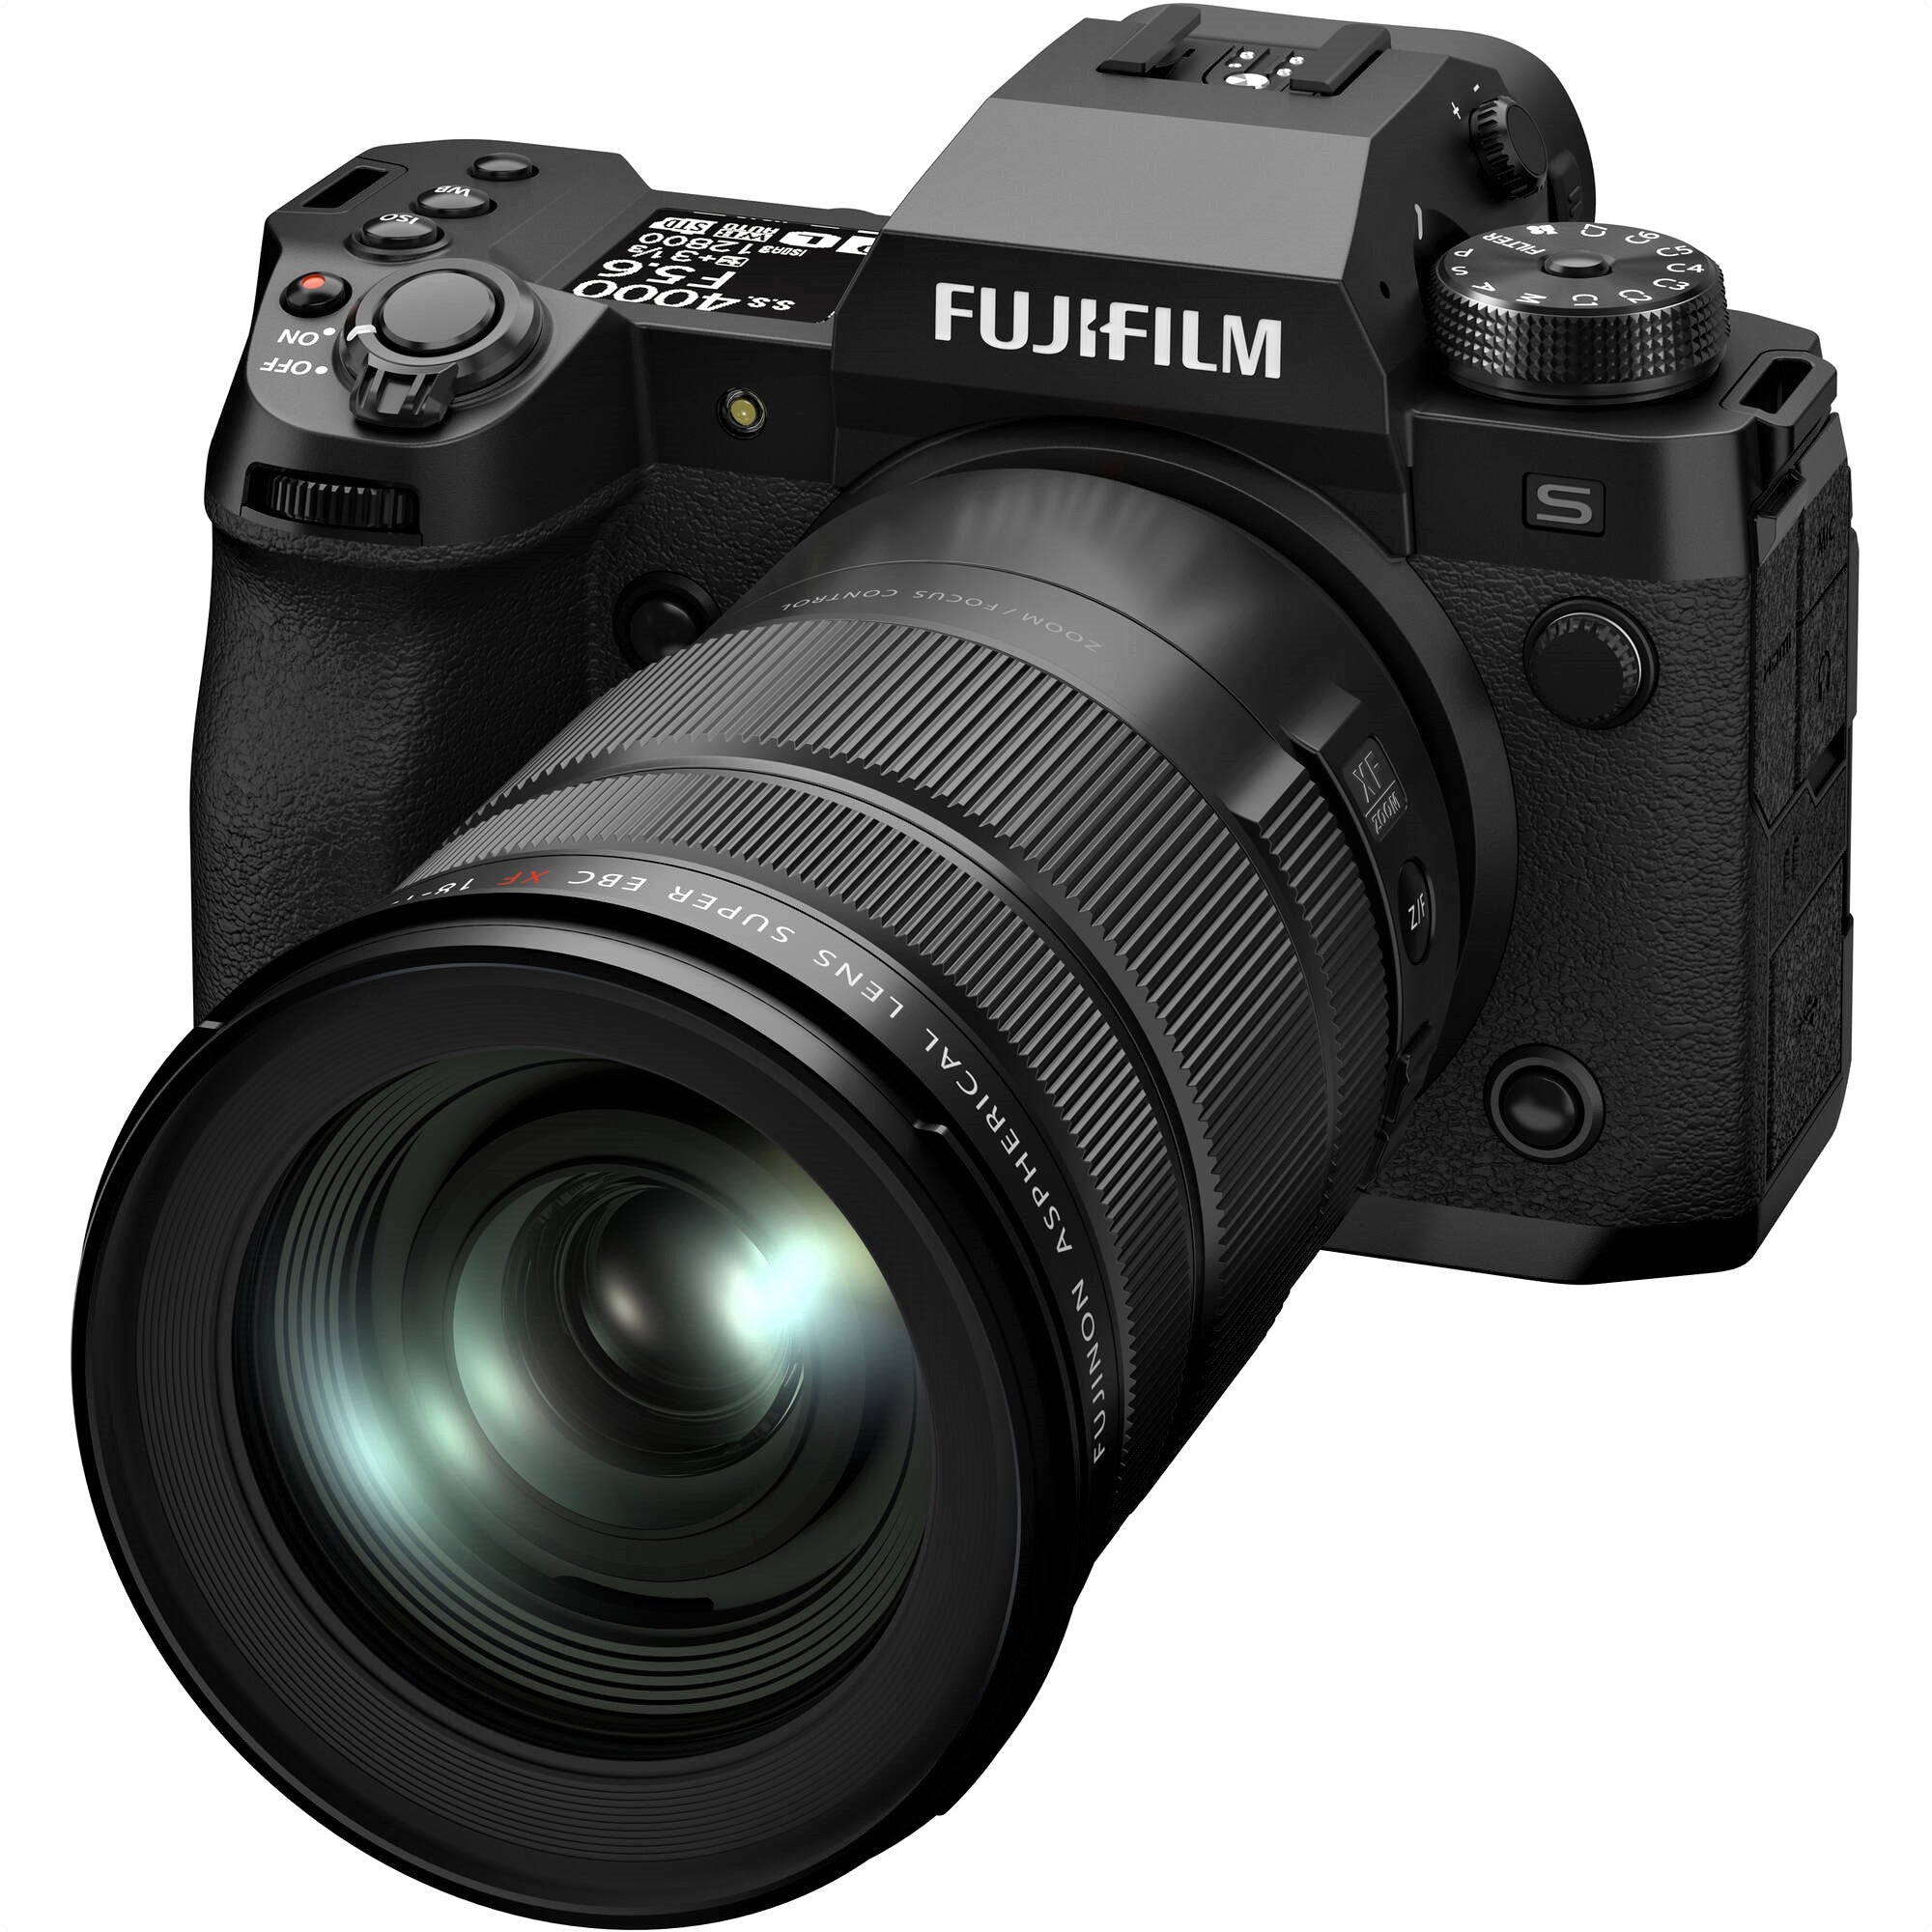 FUJIFILM XF 18-120mm f/4 LM PZ WR Lens - Attached Camera Not Included (Fujifilm Black Camera)